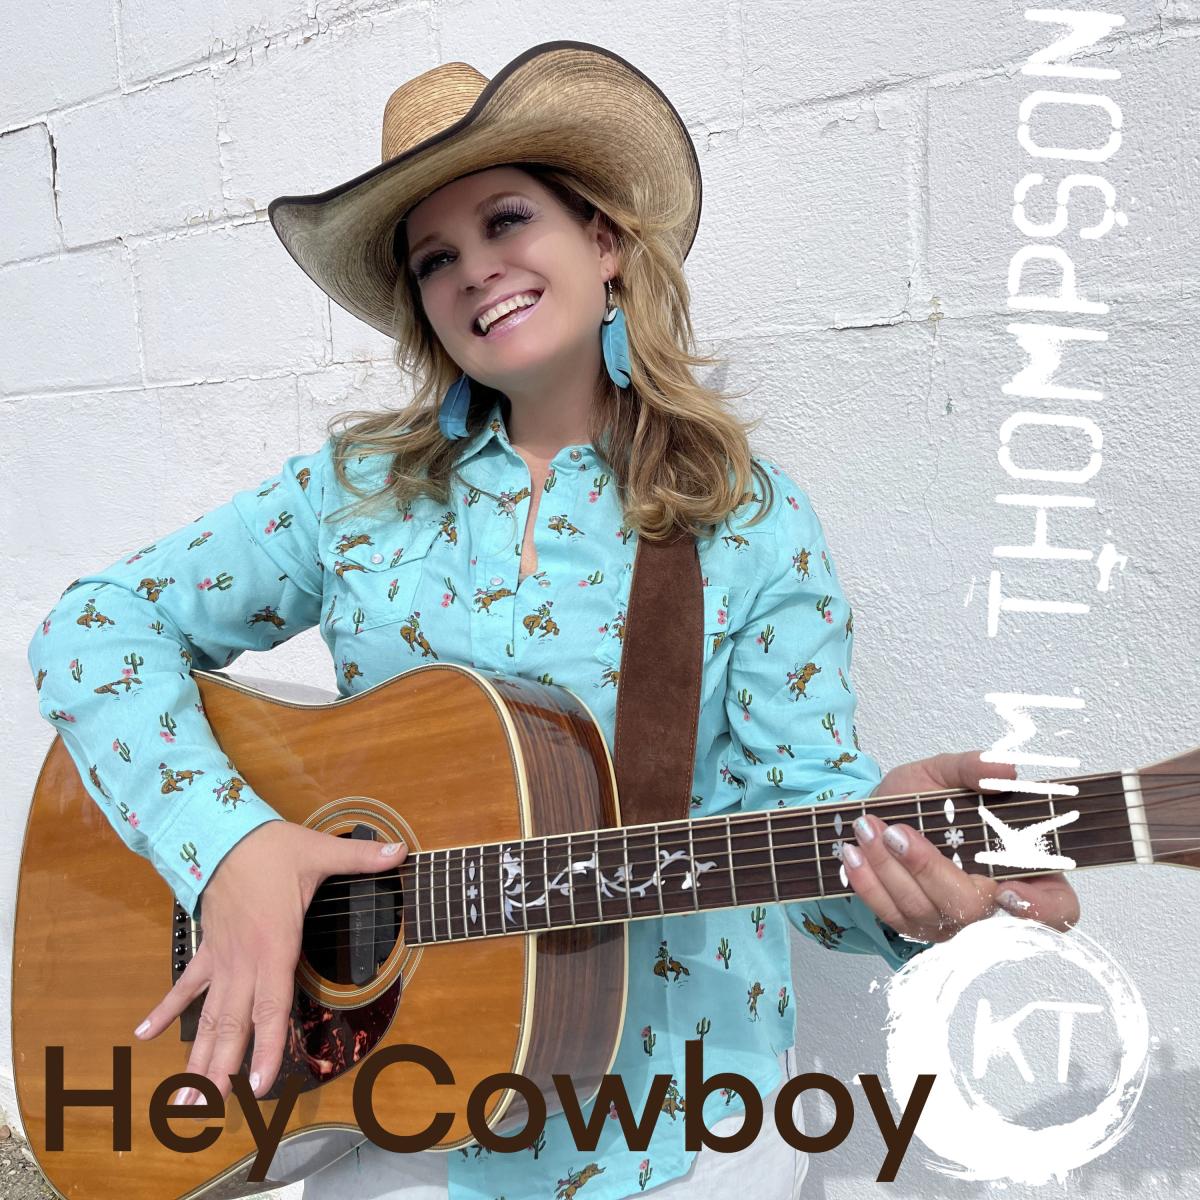 Calgary Country Star KIM THOMPSON Says ‘HEY COWBOY’ With New Single